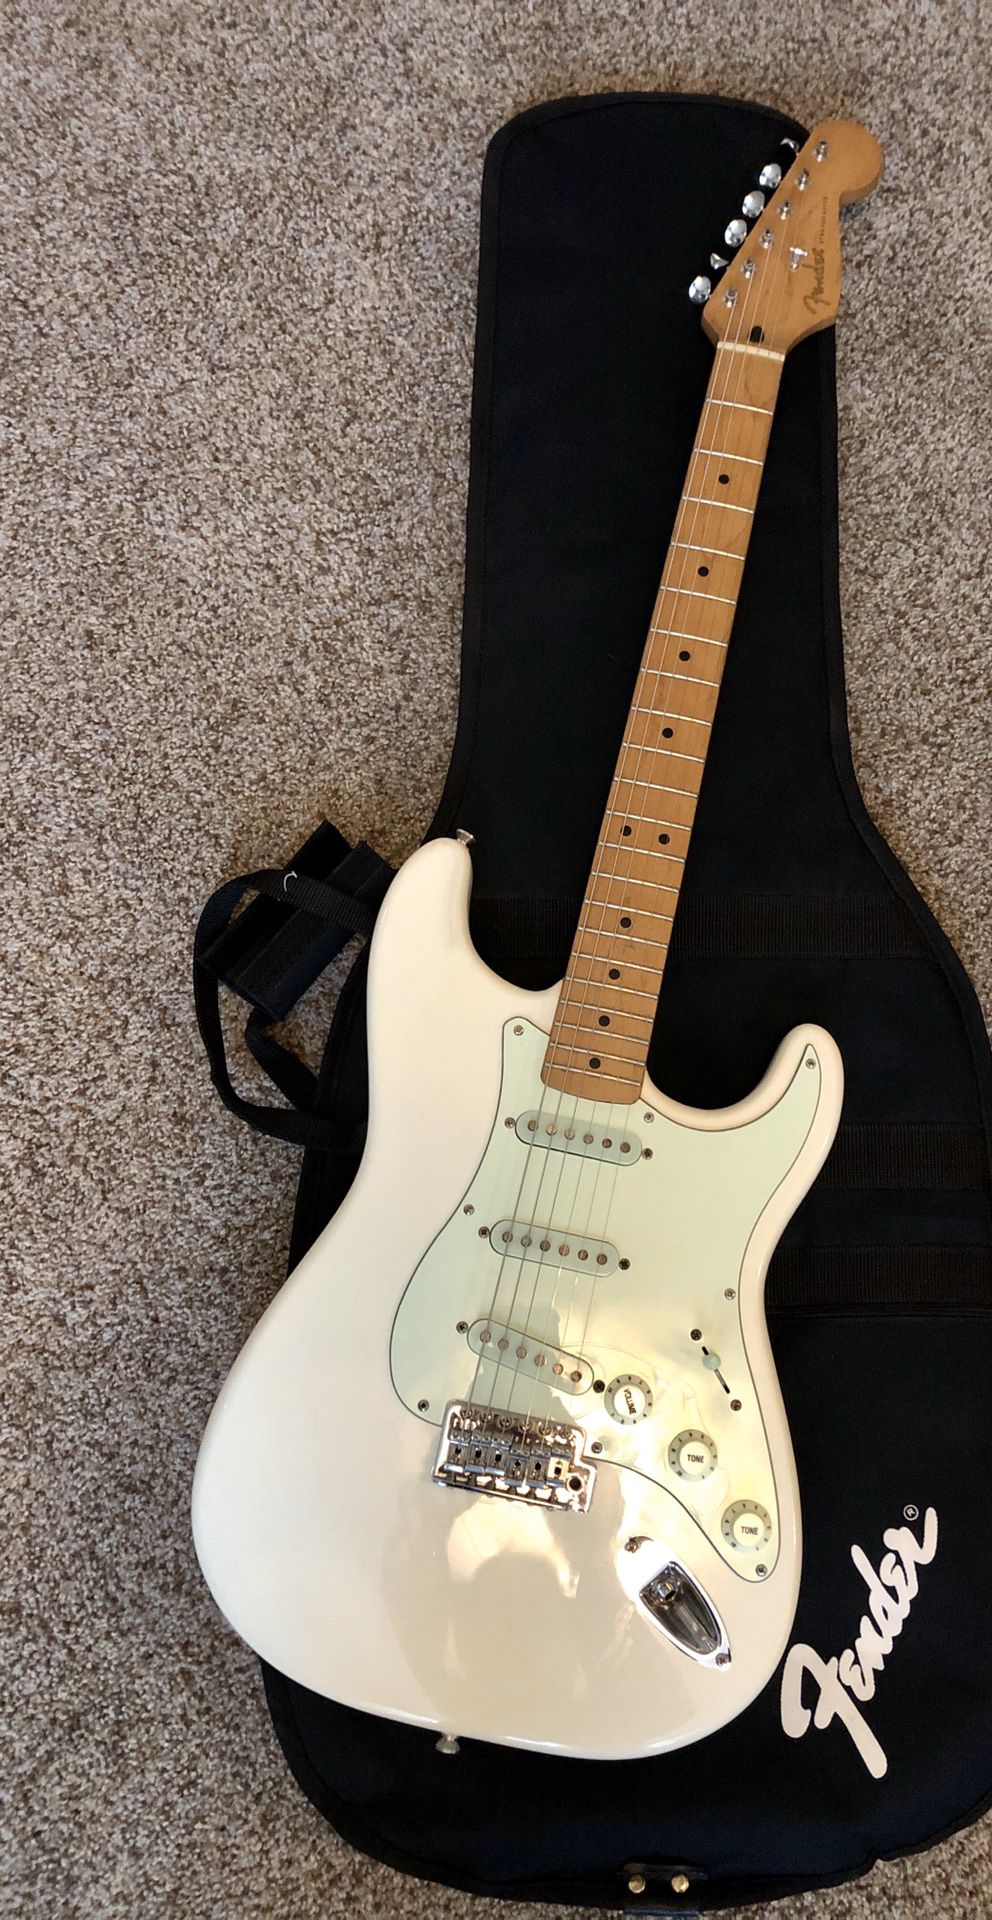 Fender guitar Olympic white vintage MIM Strat